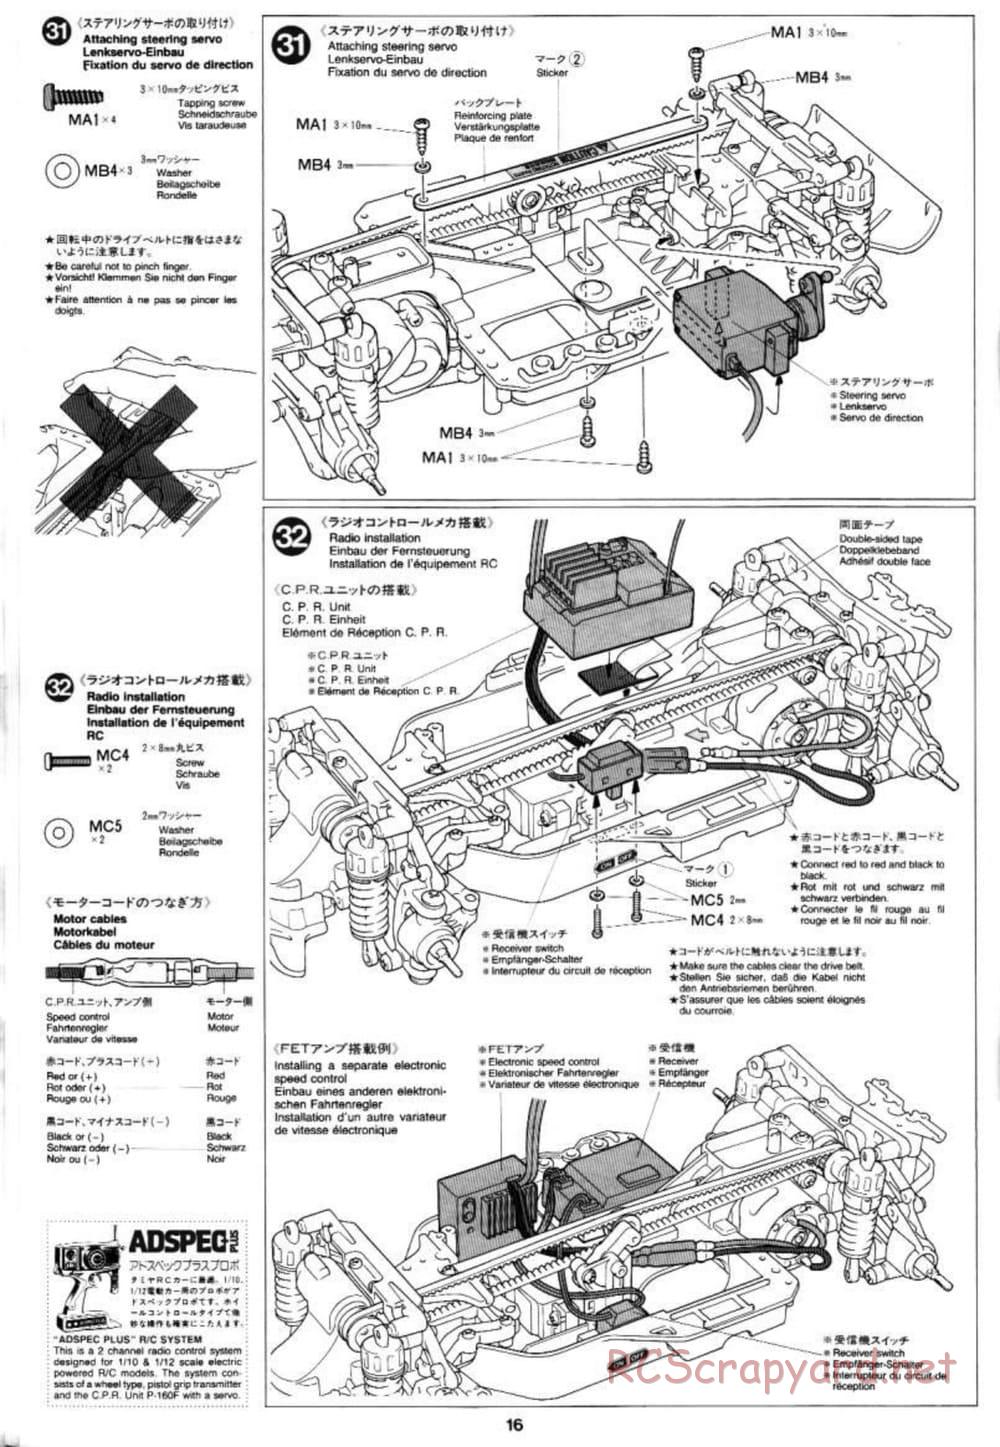 Tamiya - PIAA Porsche 911 - TA-03RS Chassis - Manual - Page 16